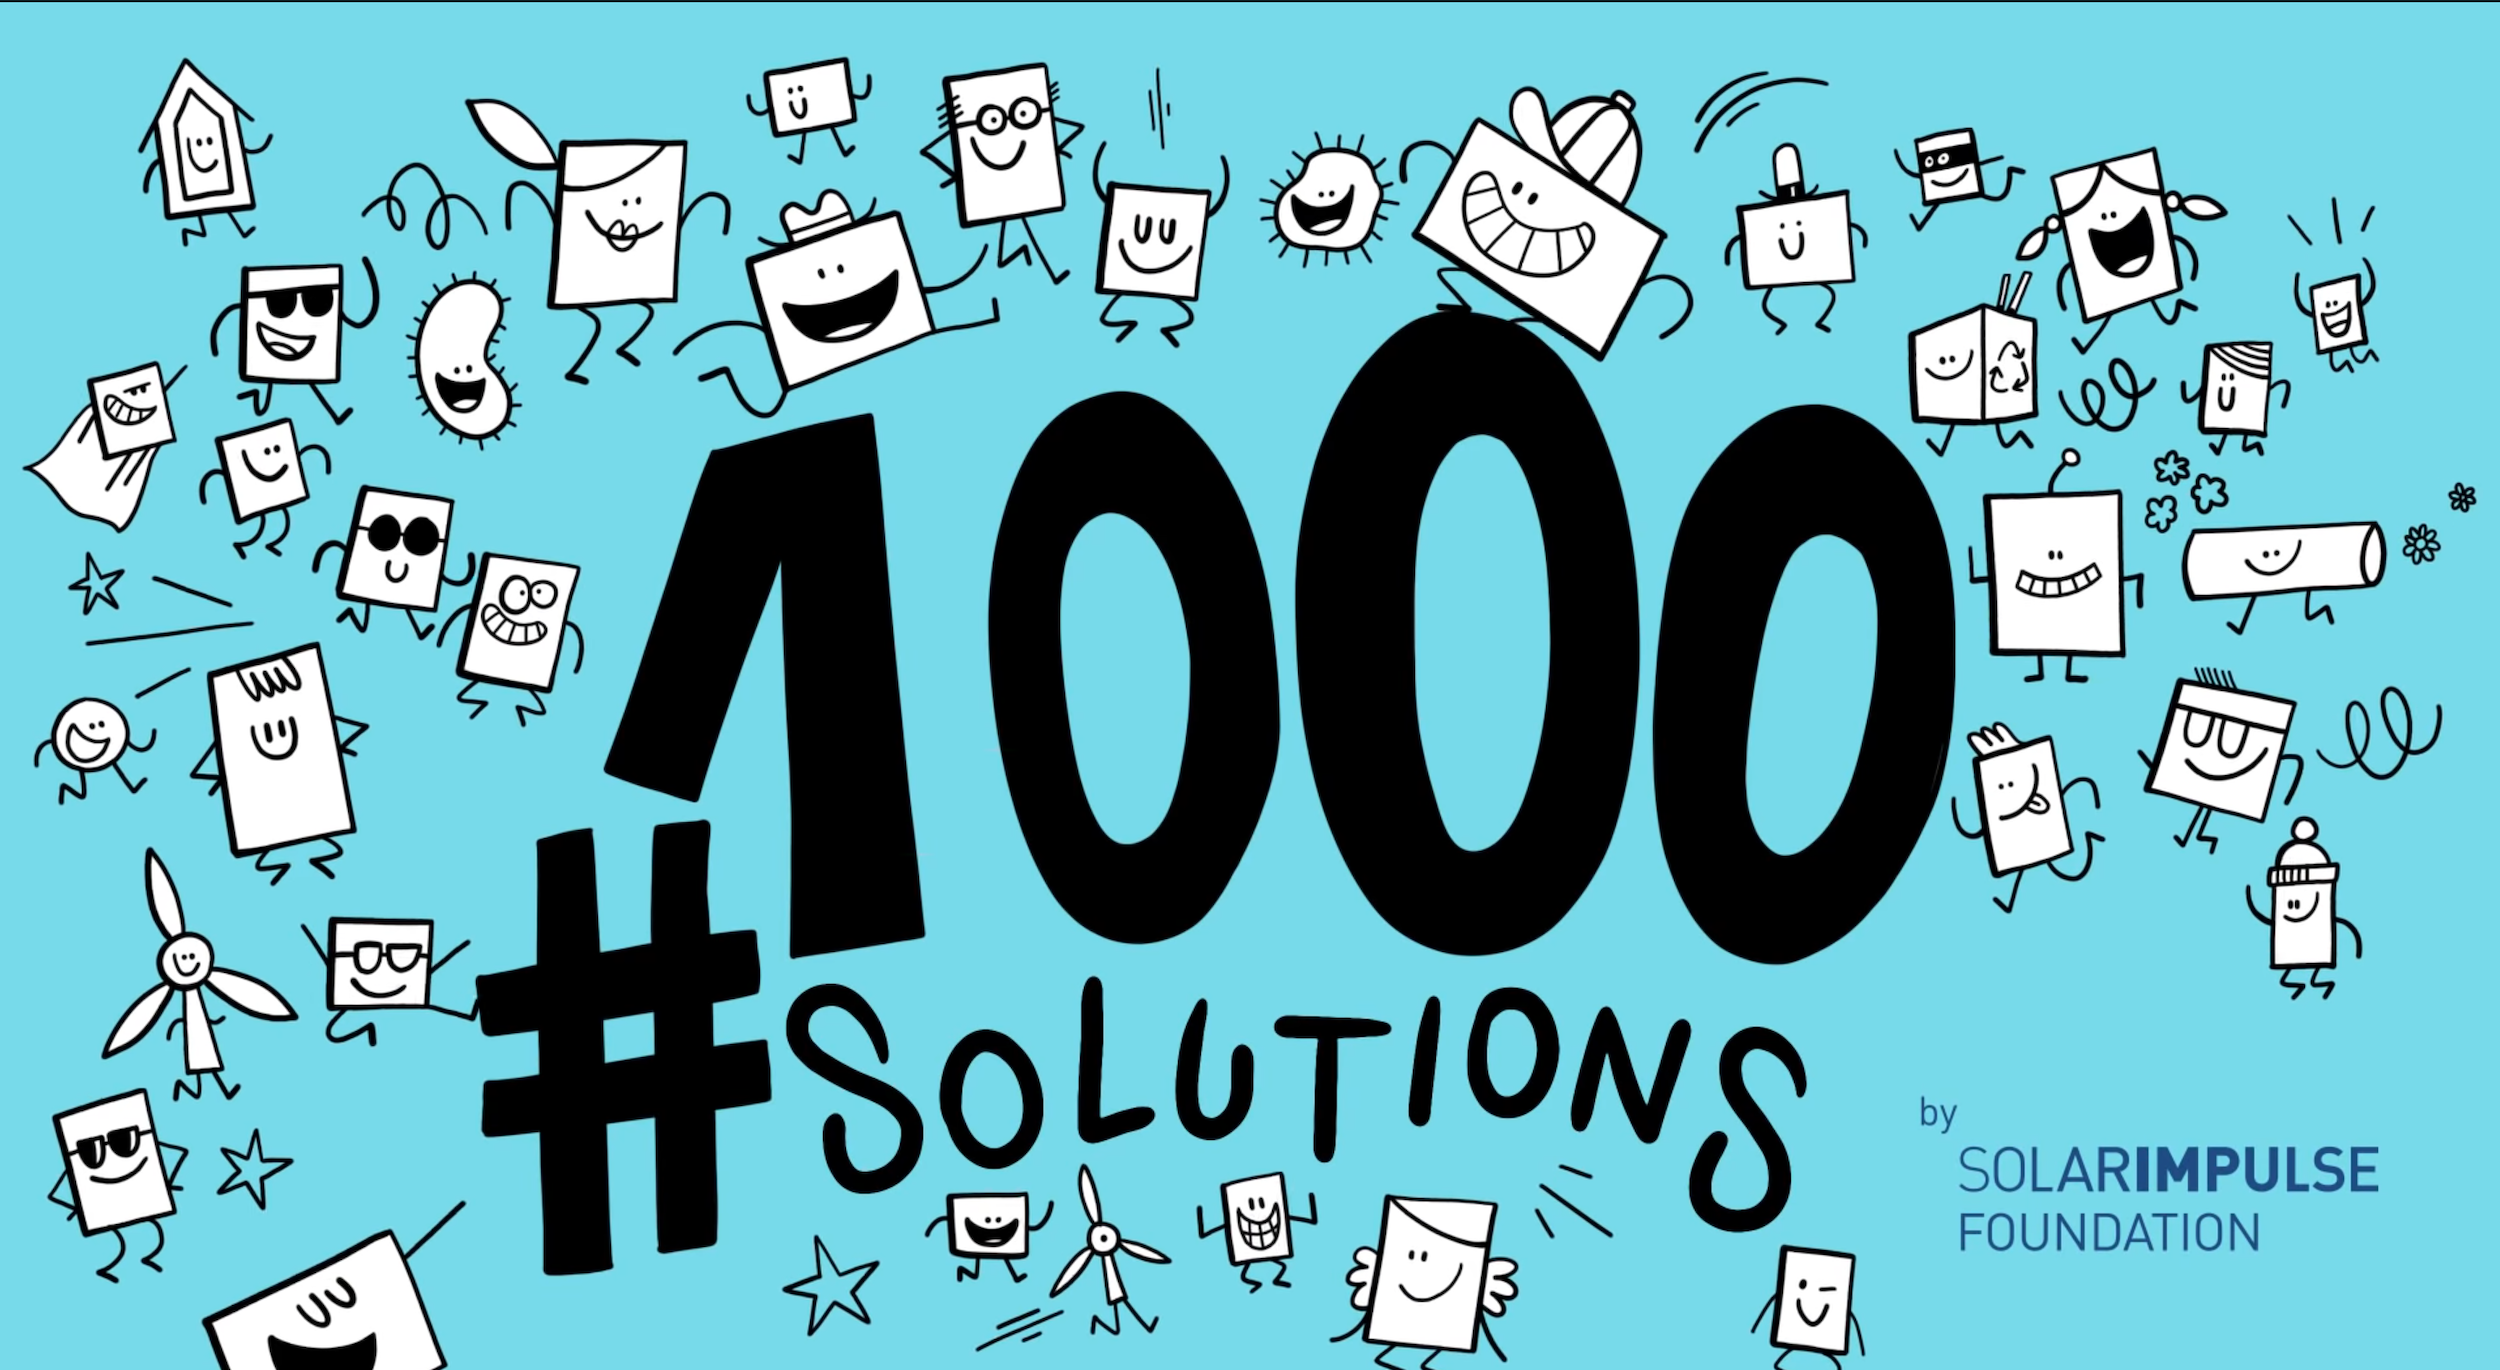 1000-solutions-solarimpulse